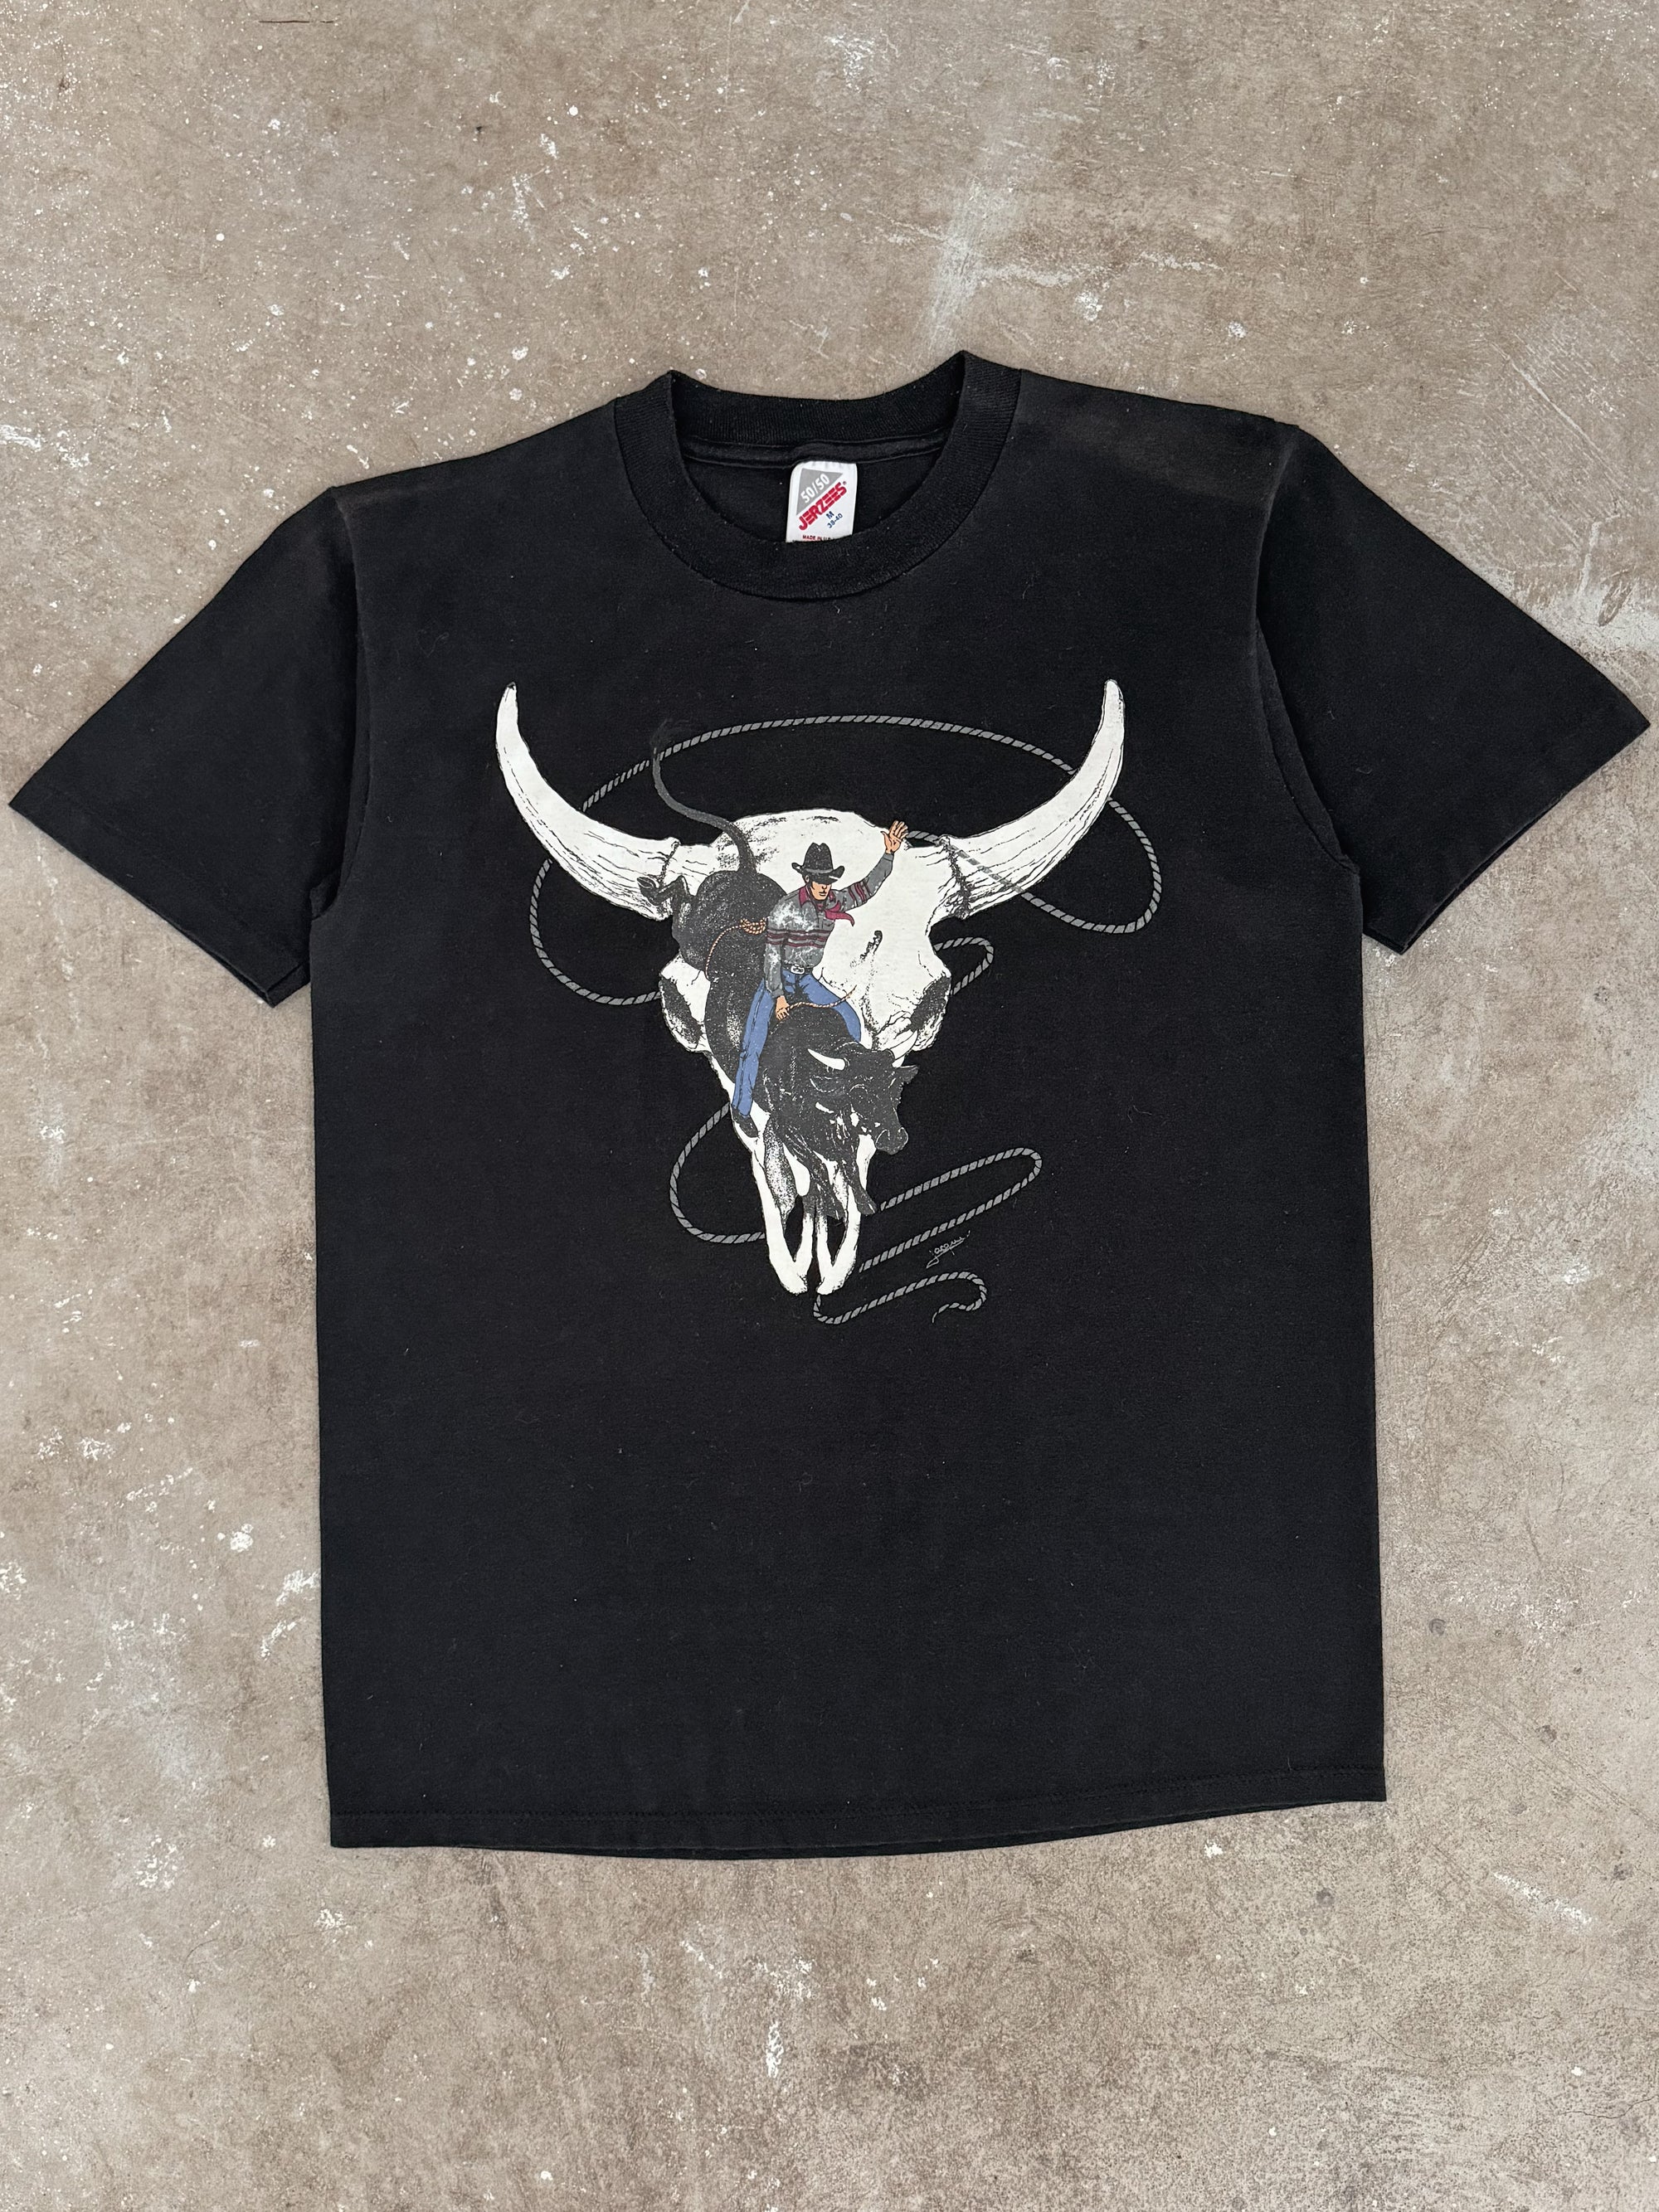 1990s "Cowboy Bull Skull" Tee (M)